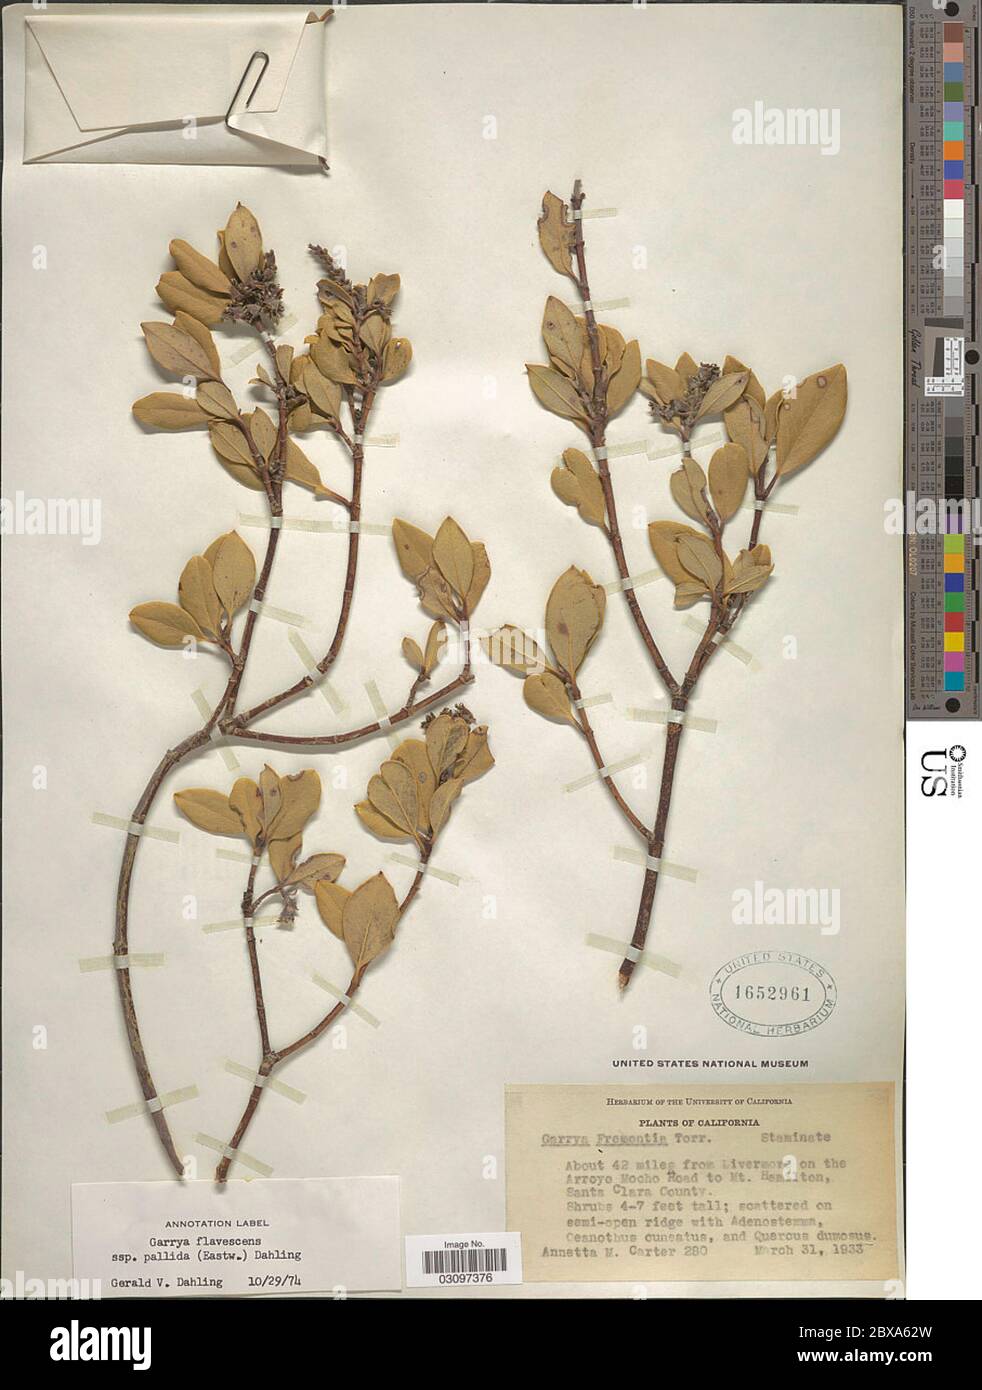 Garrya flavescens subsp pallida Eastw Bacig ex Ewan Garrya flavescens subsp pallida Eastw Bacig ex Ewan. Stock Photo